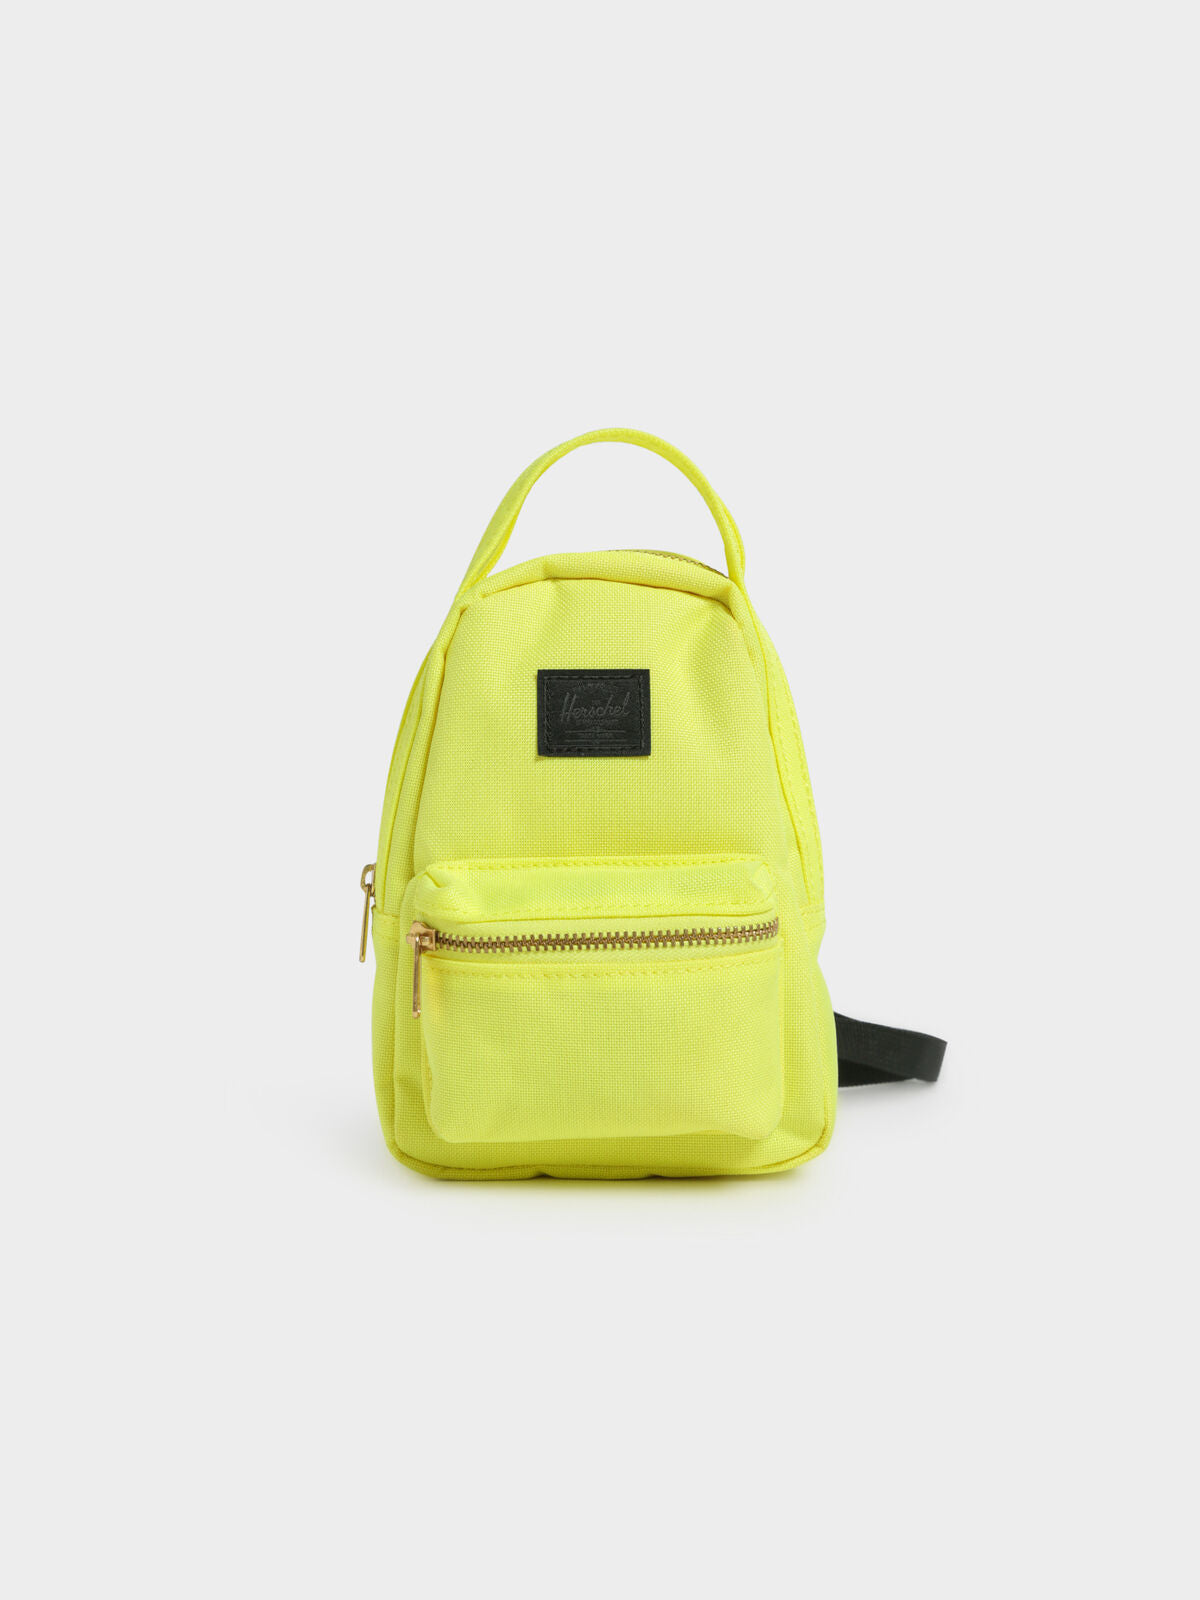 Nova Extra Mini Crossbody Bag in Yellow Highlight &amp; Black